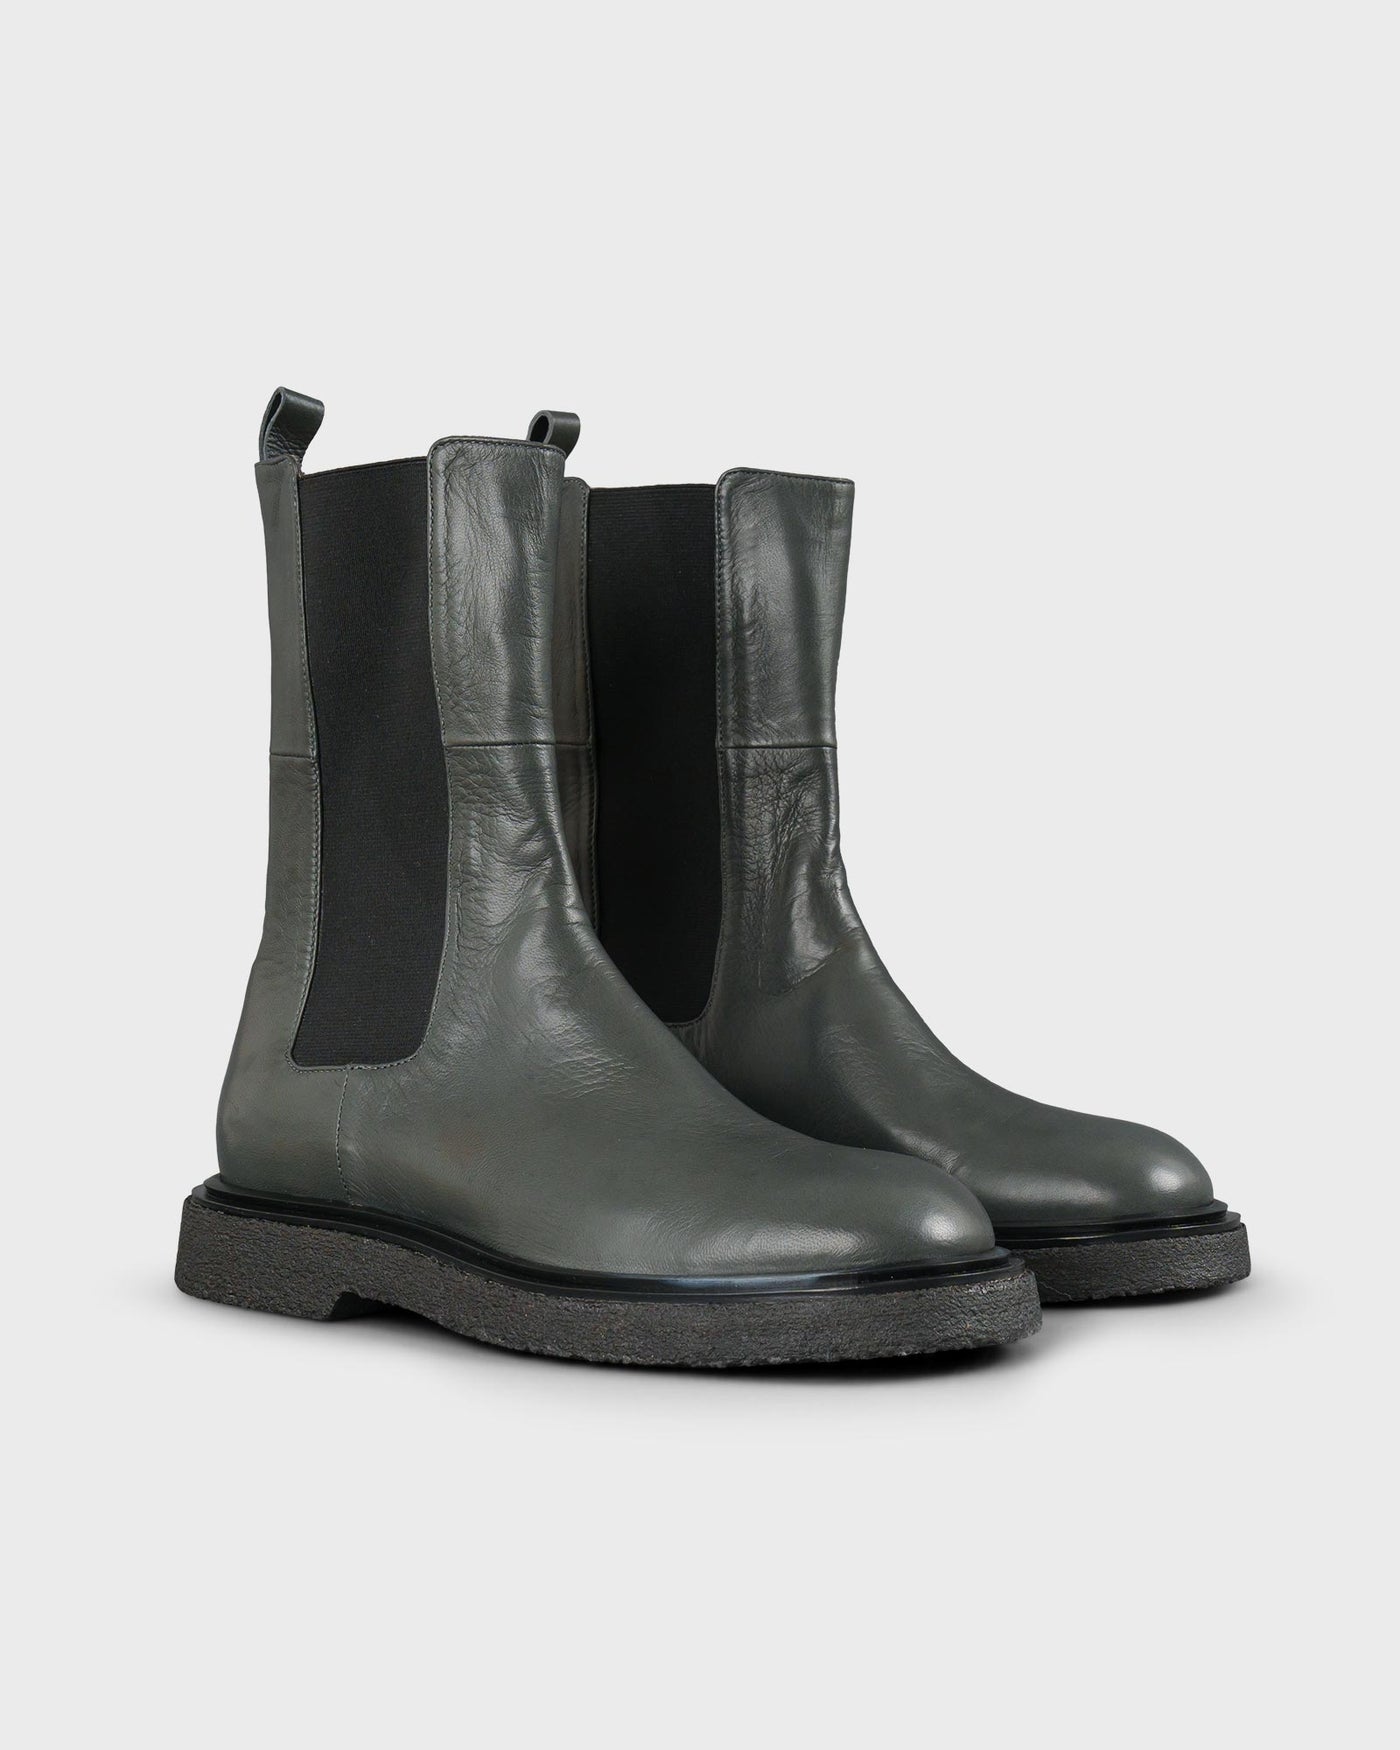 Pomme Dor Damen Boots Clea 2114 Glove Asphalt myMEID